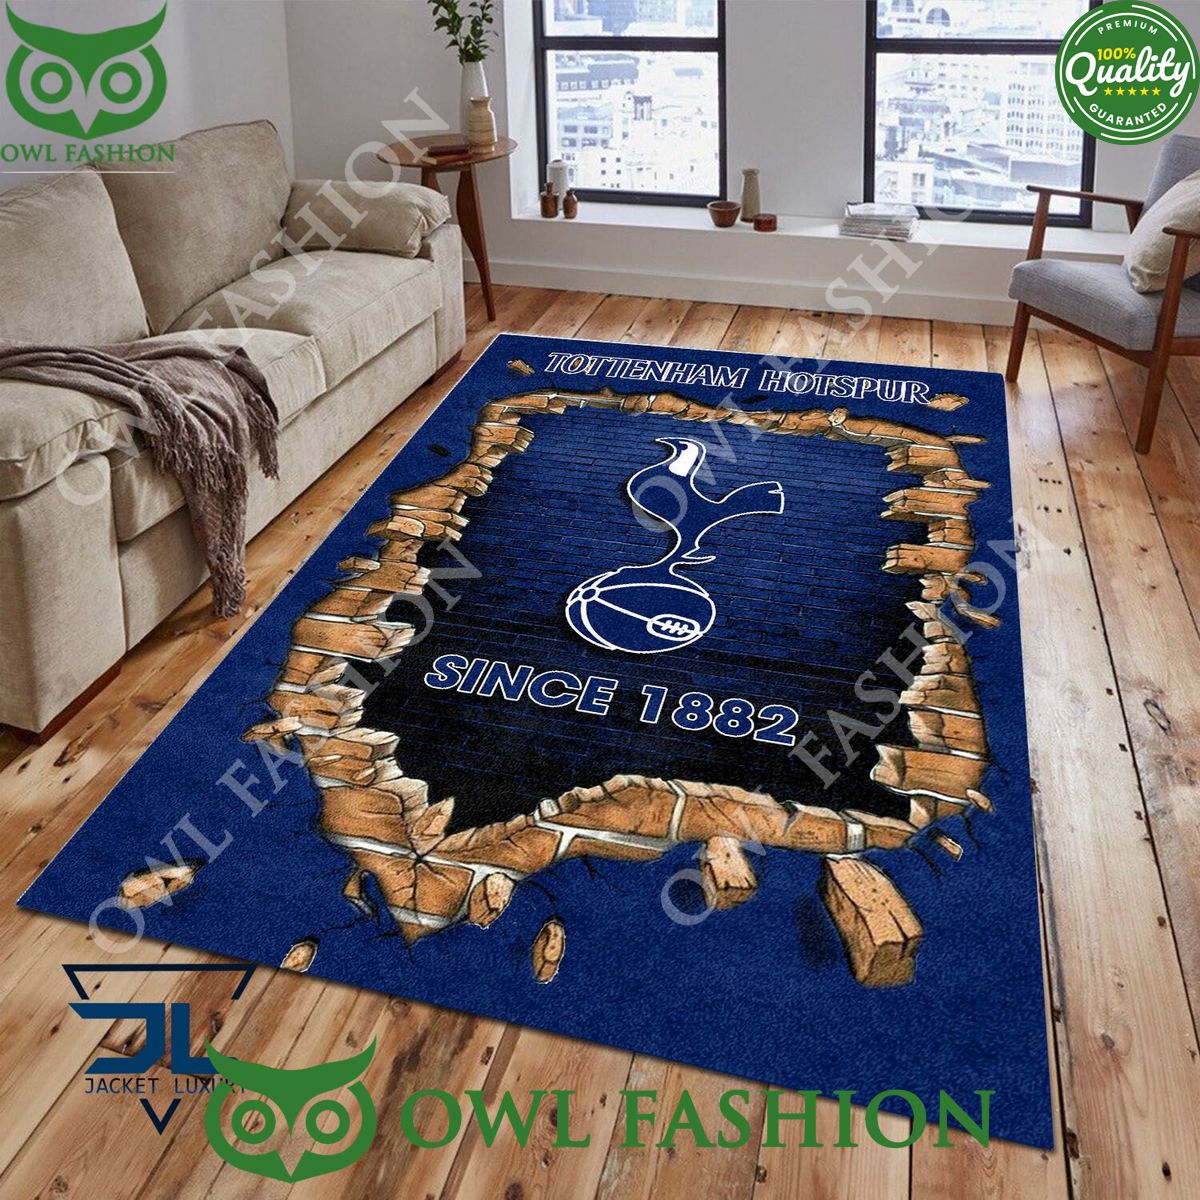 Tottenham Hotspur F.C 1883 Premier League Living Room Carpet Cutting dash